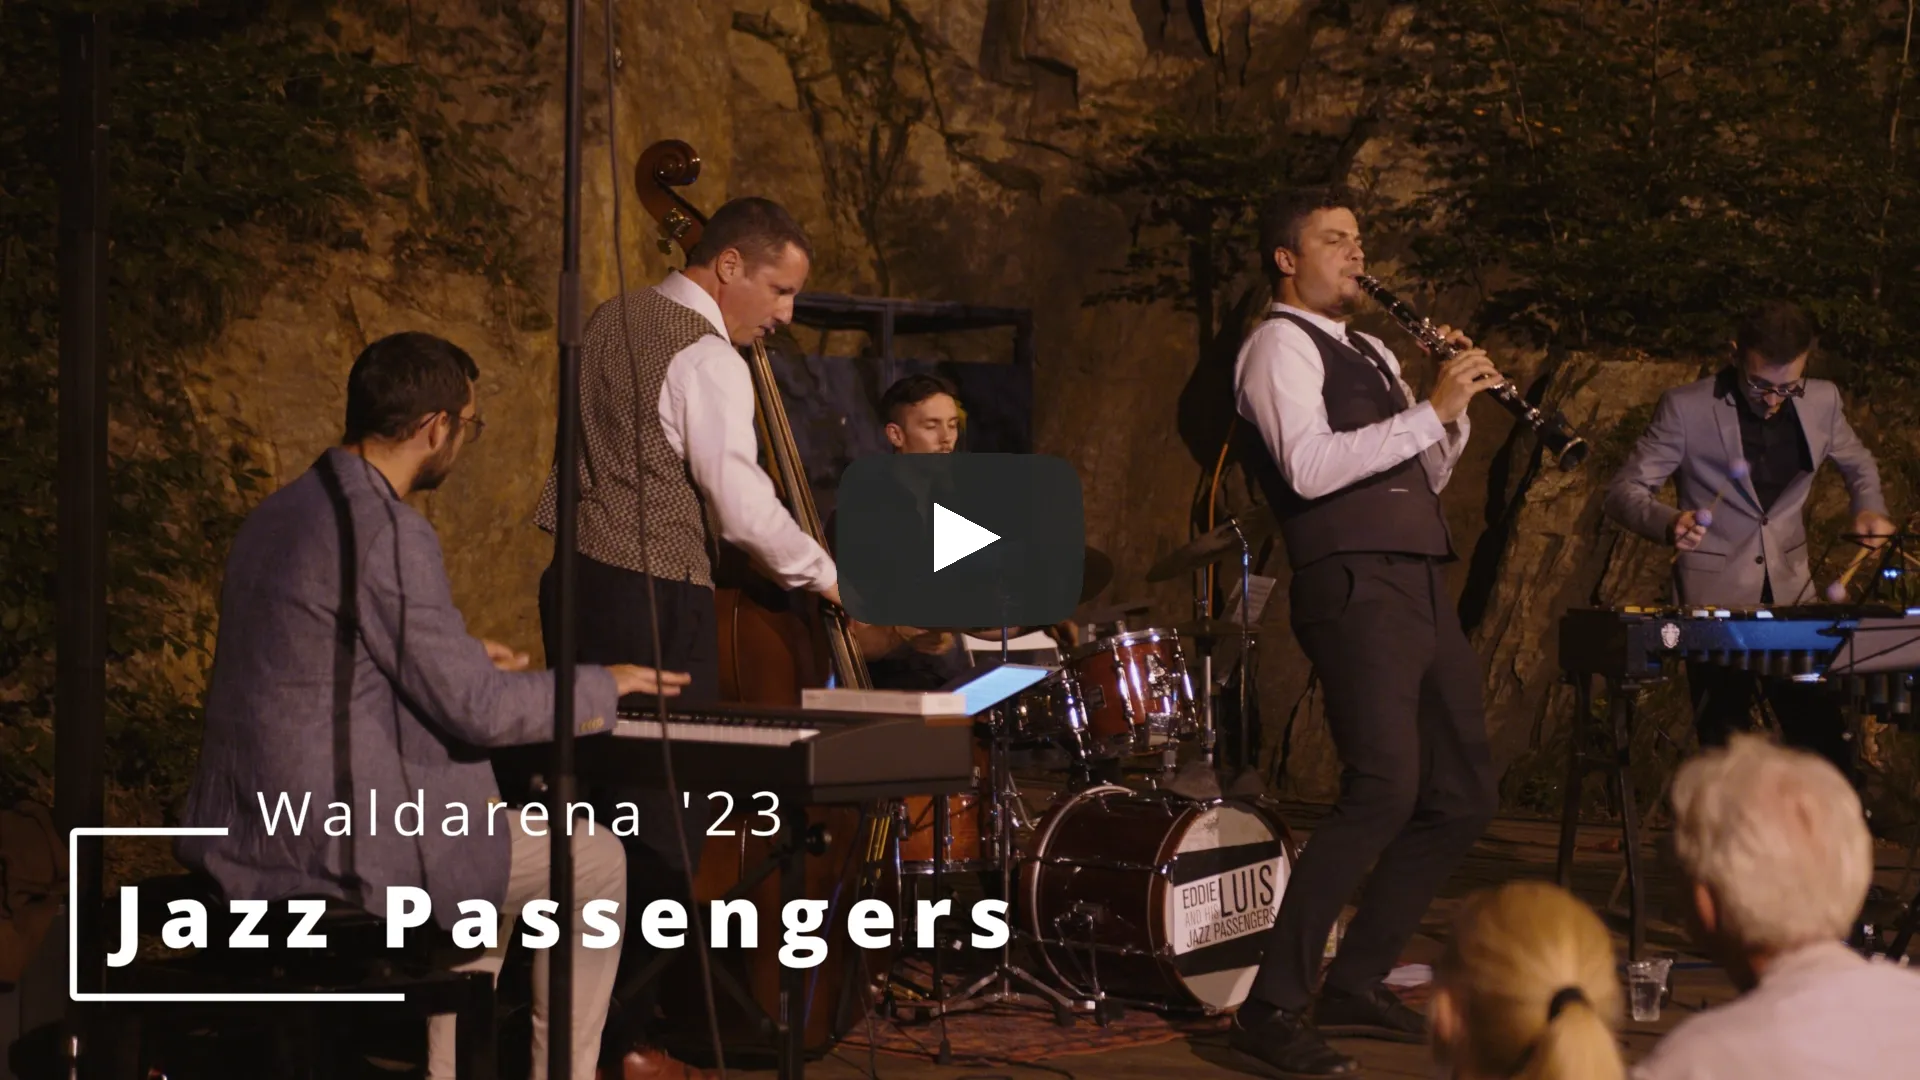 15. Aug 23' - Eddie Luis and His Jazz Passengers